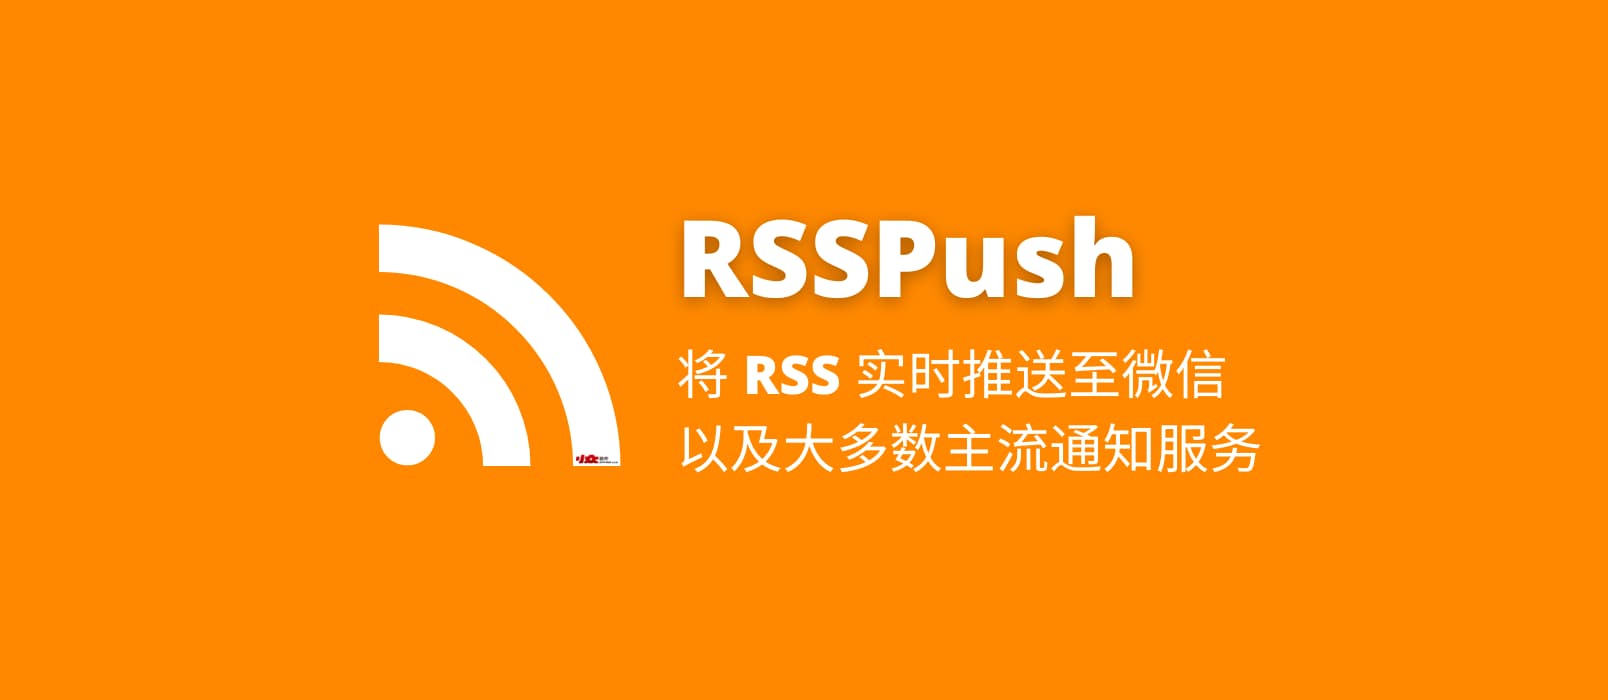 RSSPush - 将 RSS 实时推送至微信，以及大多数主流通知服务